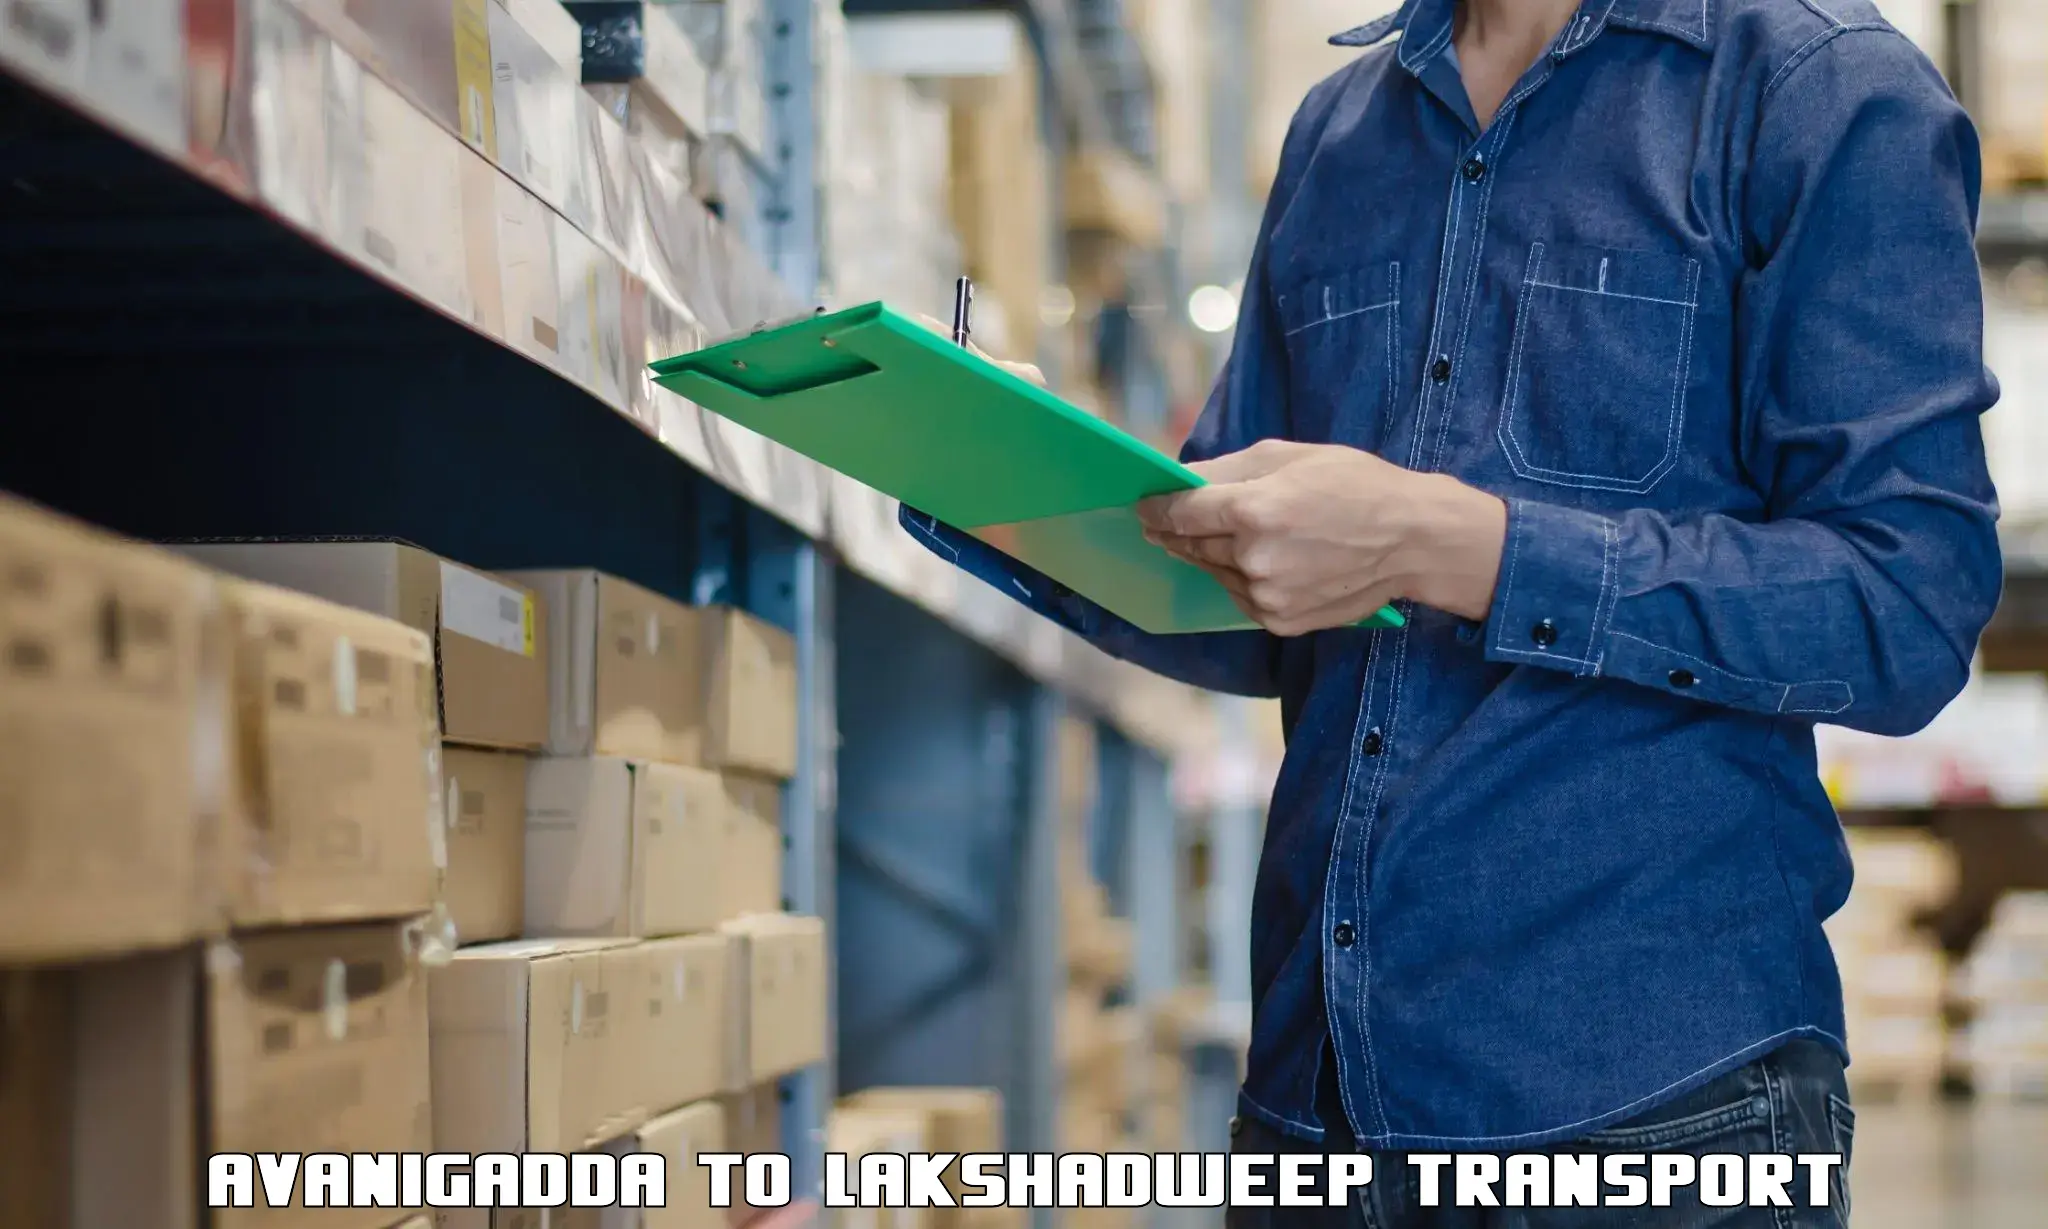 Transport shared services Avanigadda to Lakshadweep